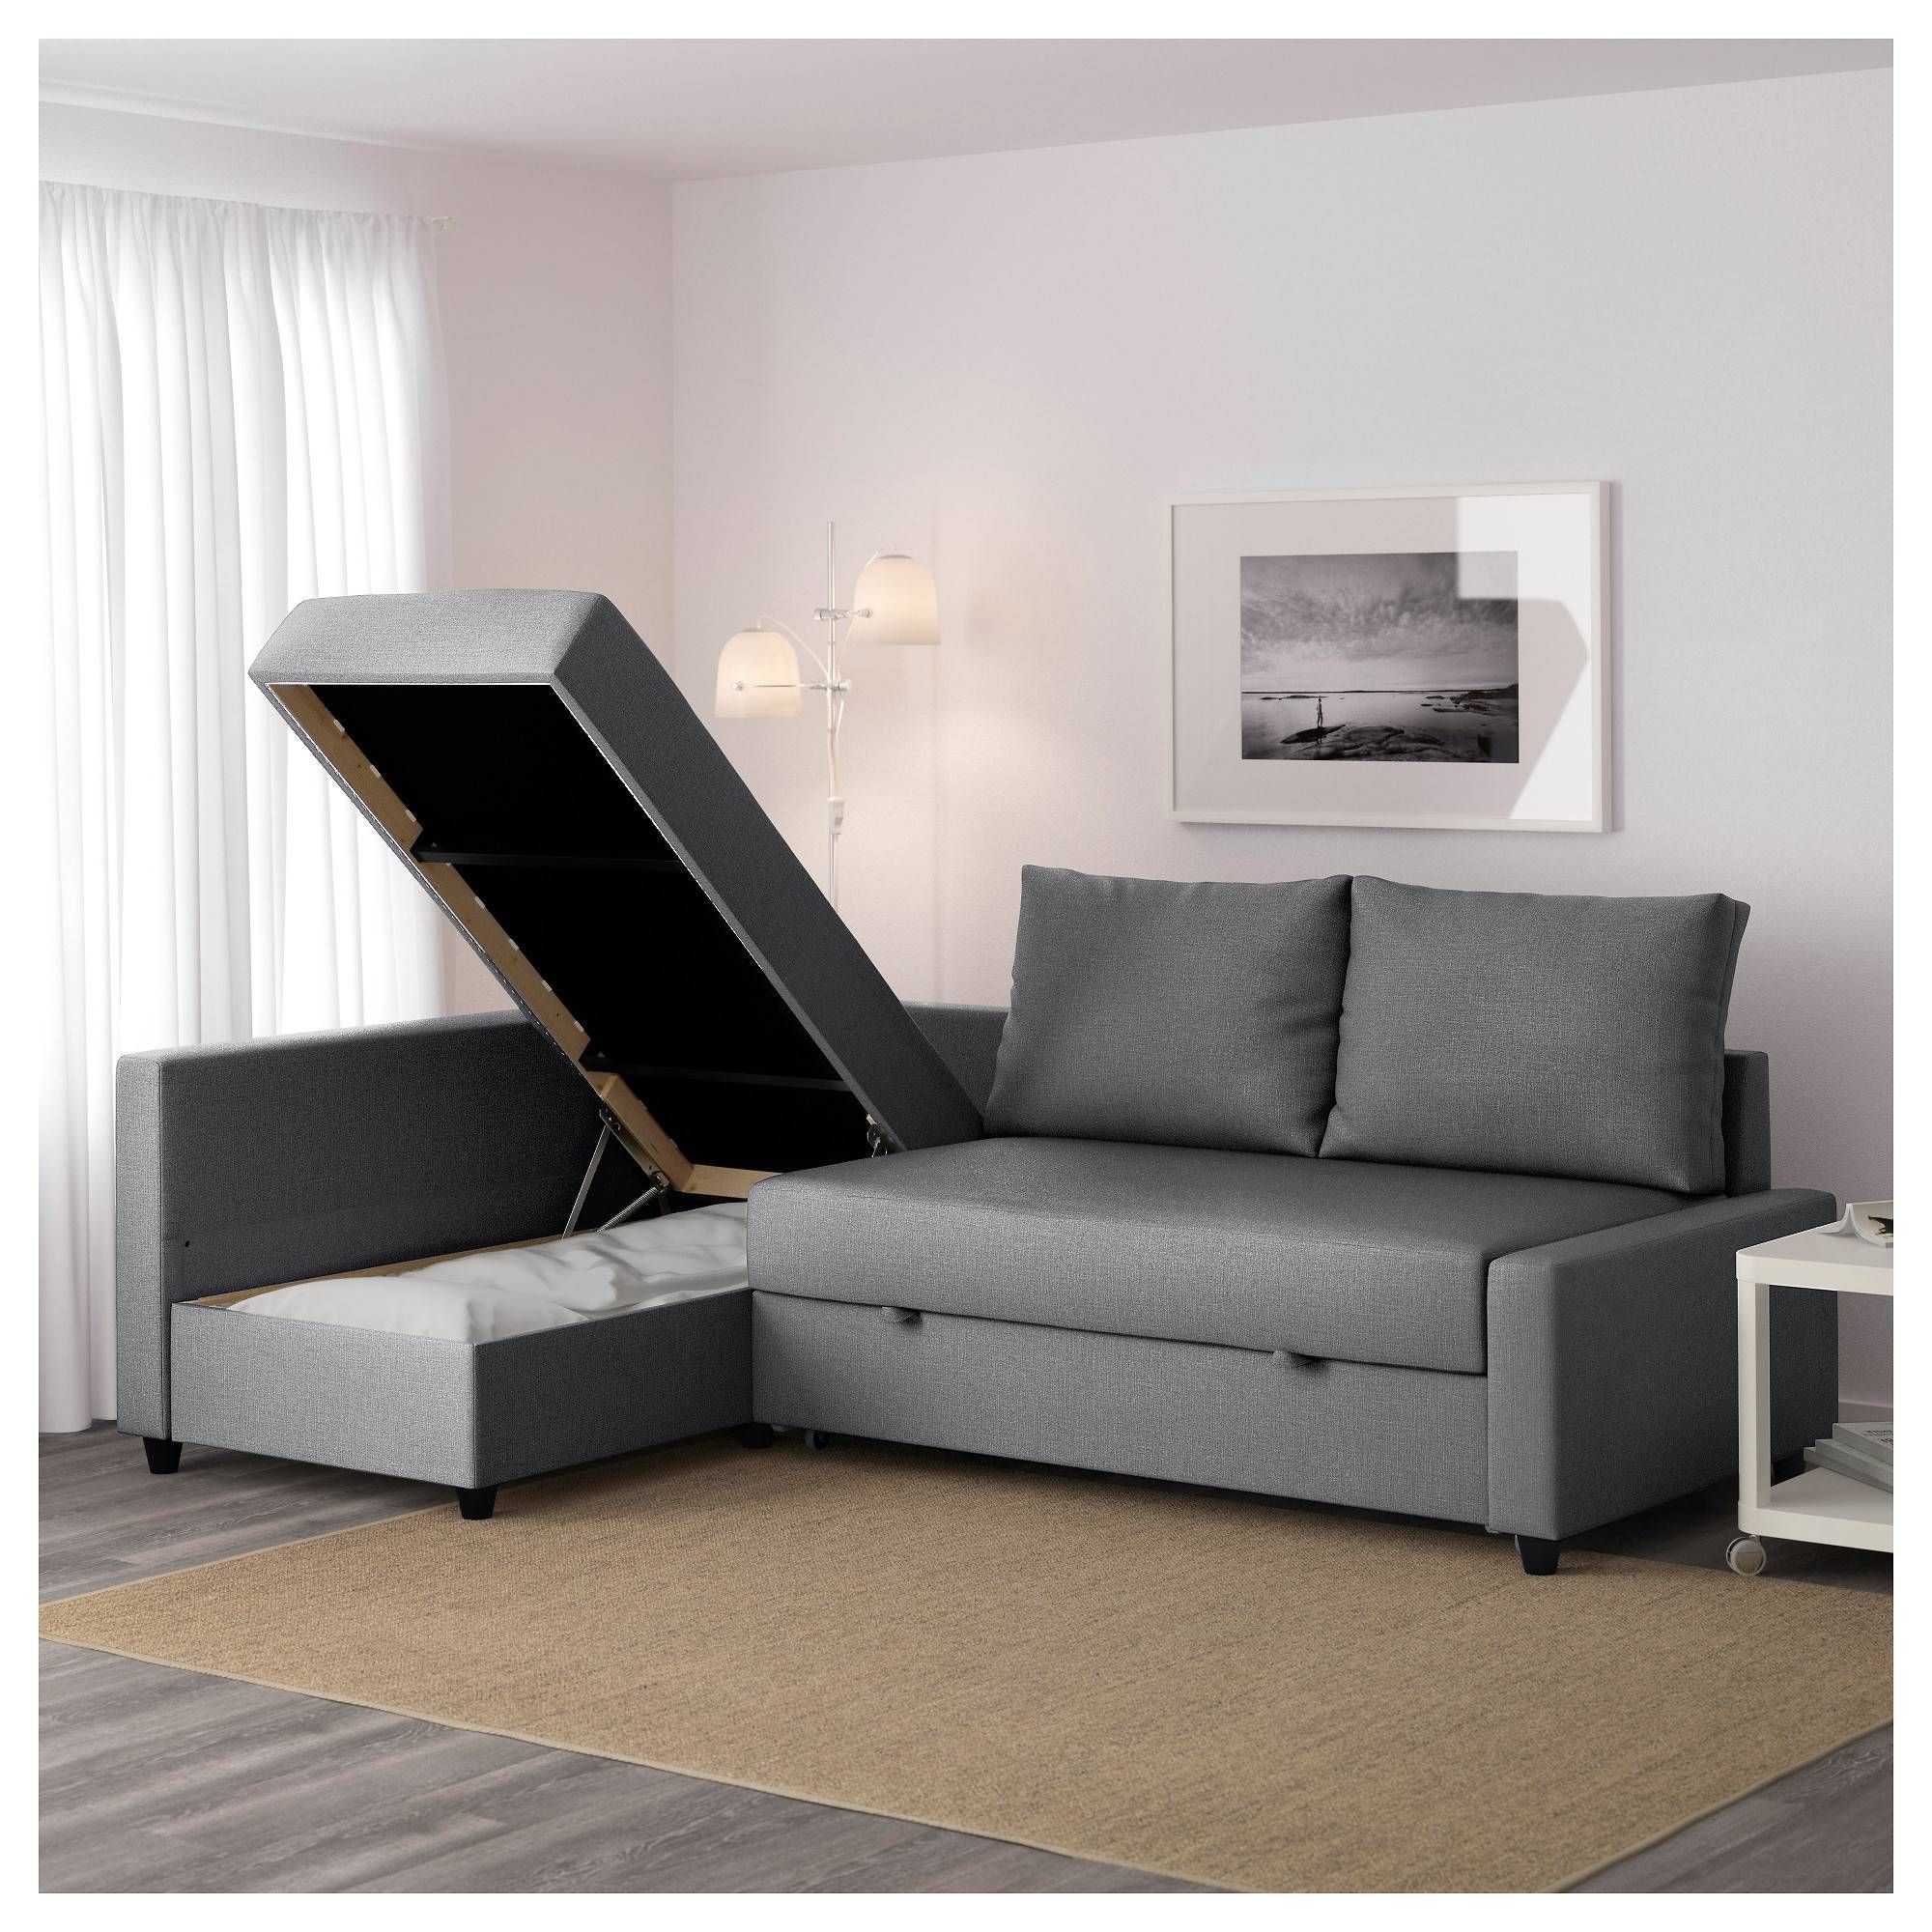 Friheten Corner Sofa Bed With Storage – Skiftebo Dark Grey – Ikea With Regard To Storage Sofa Ikea (View 8 of 25)